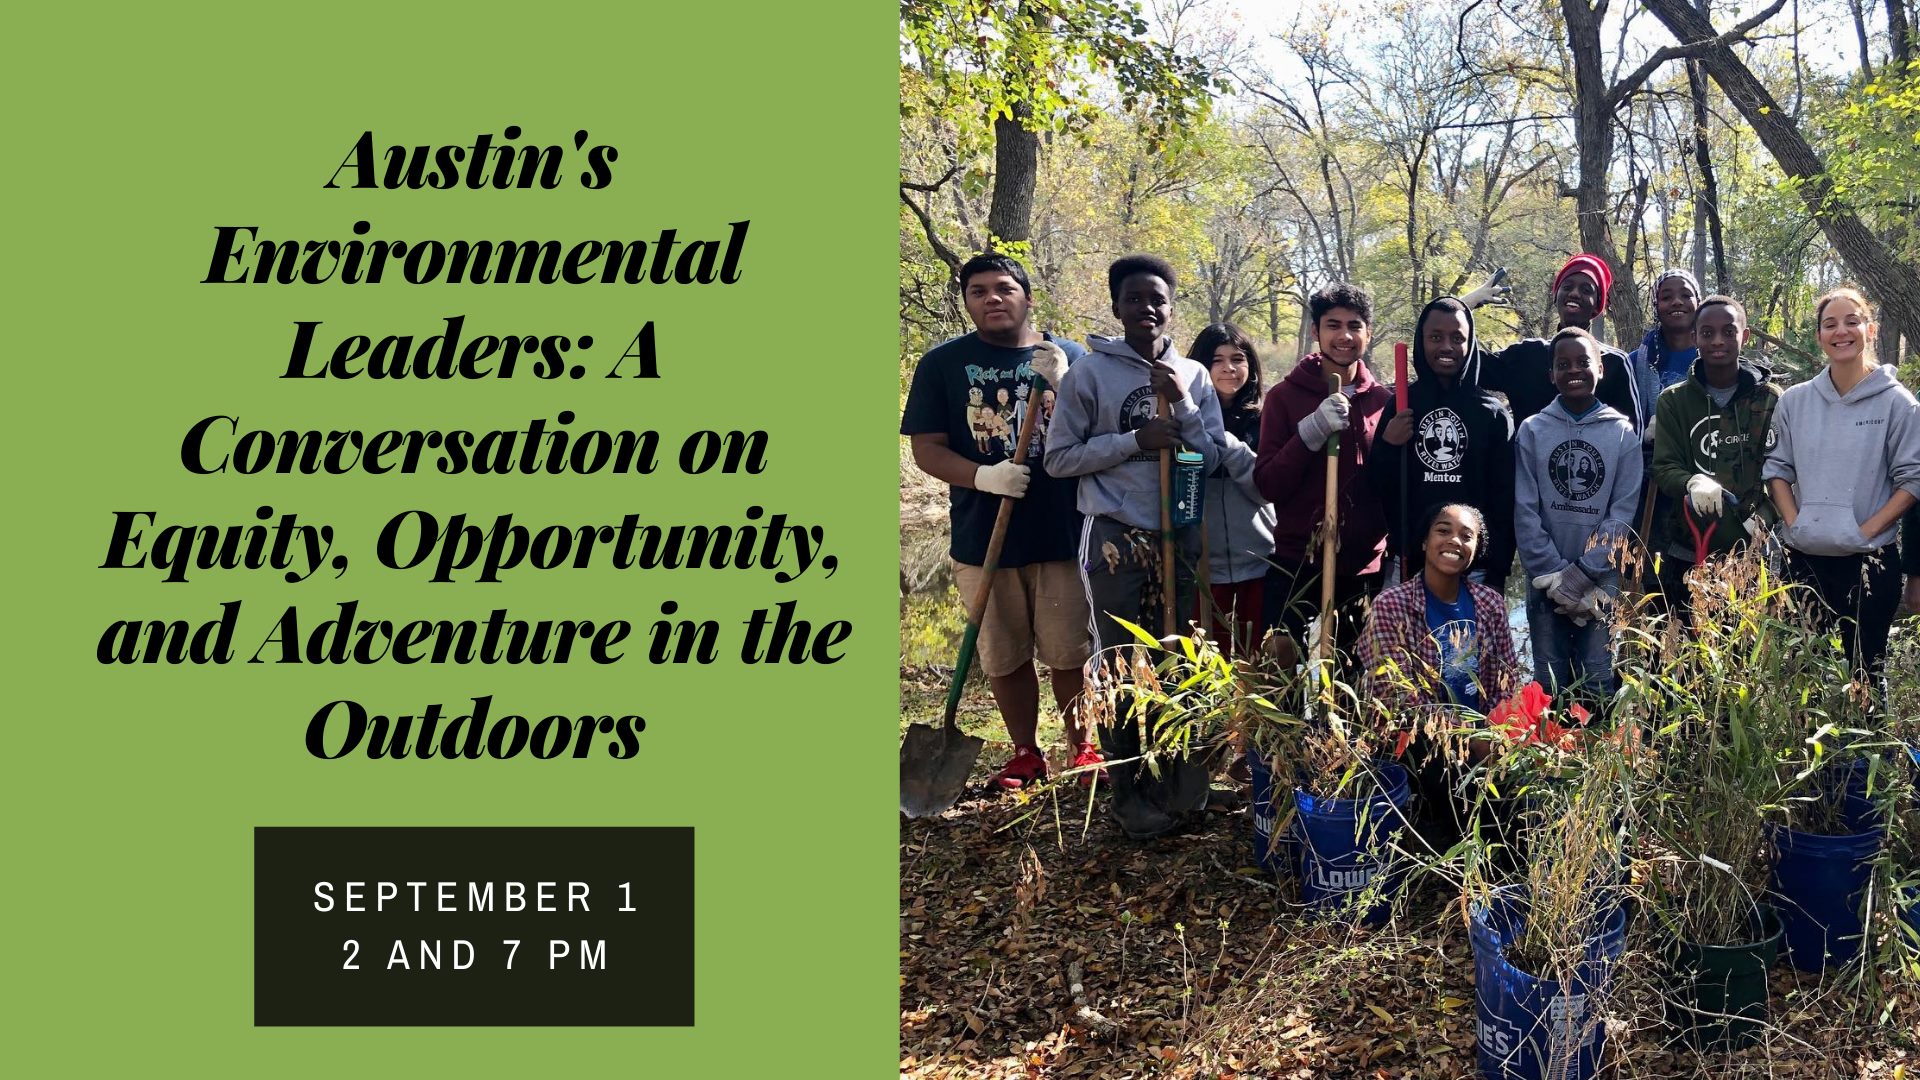 Austin's Environmental Leaders